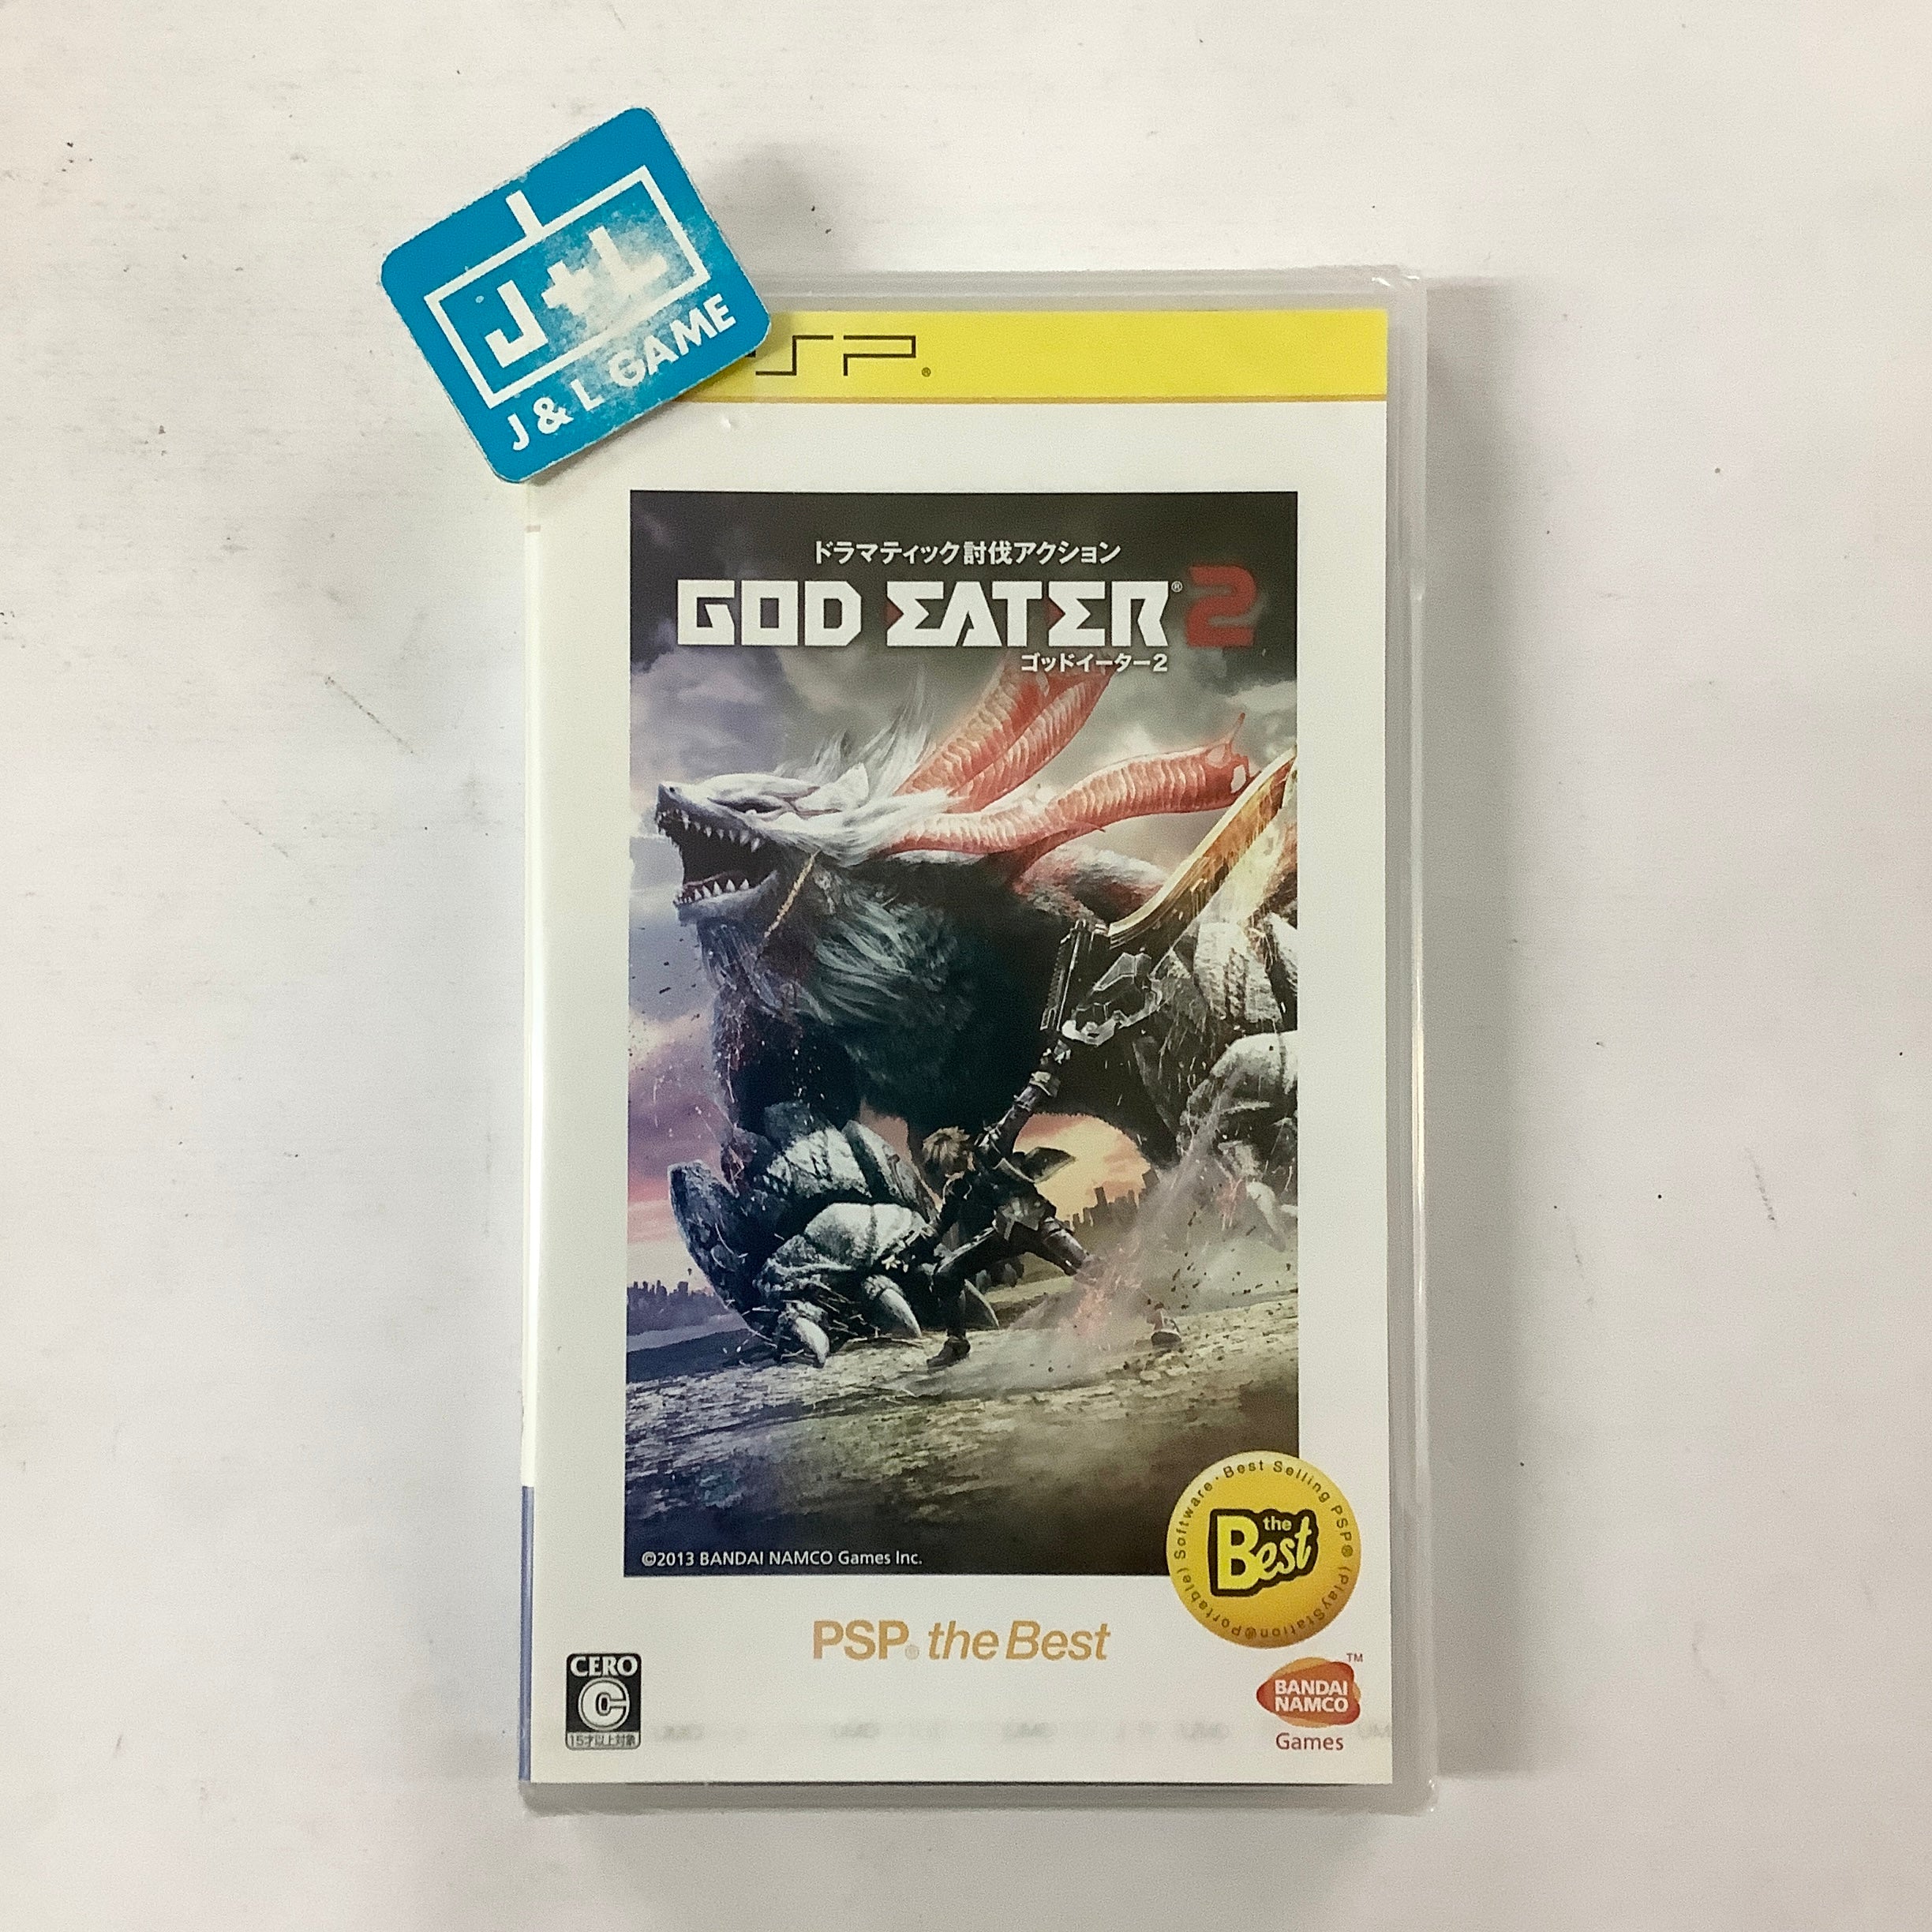 God Eater 2 (PSP the Best) - Sony PSP (Japanese Import) Video Games Bandai Namco Games   